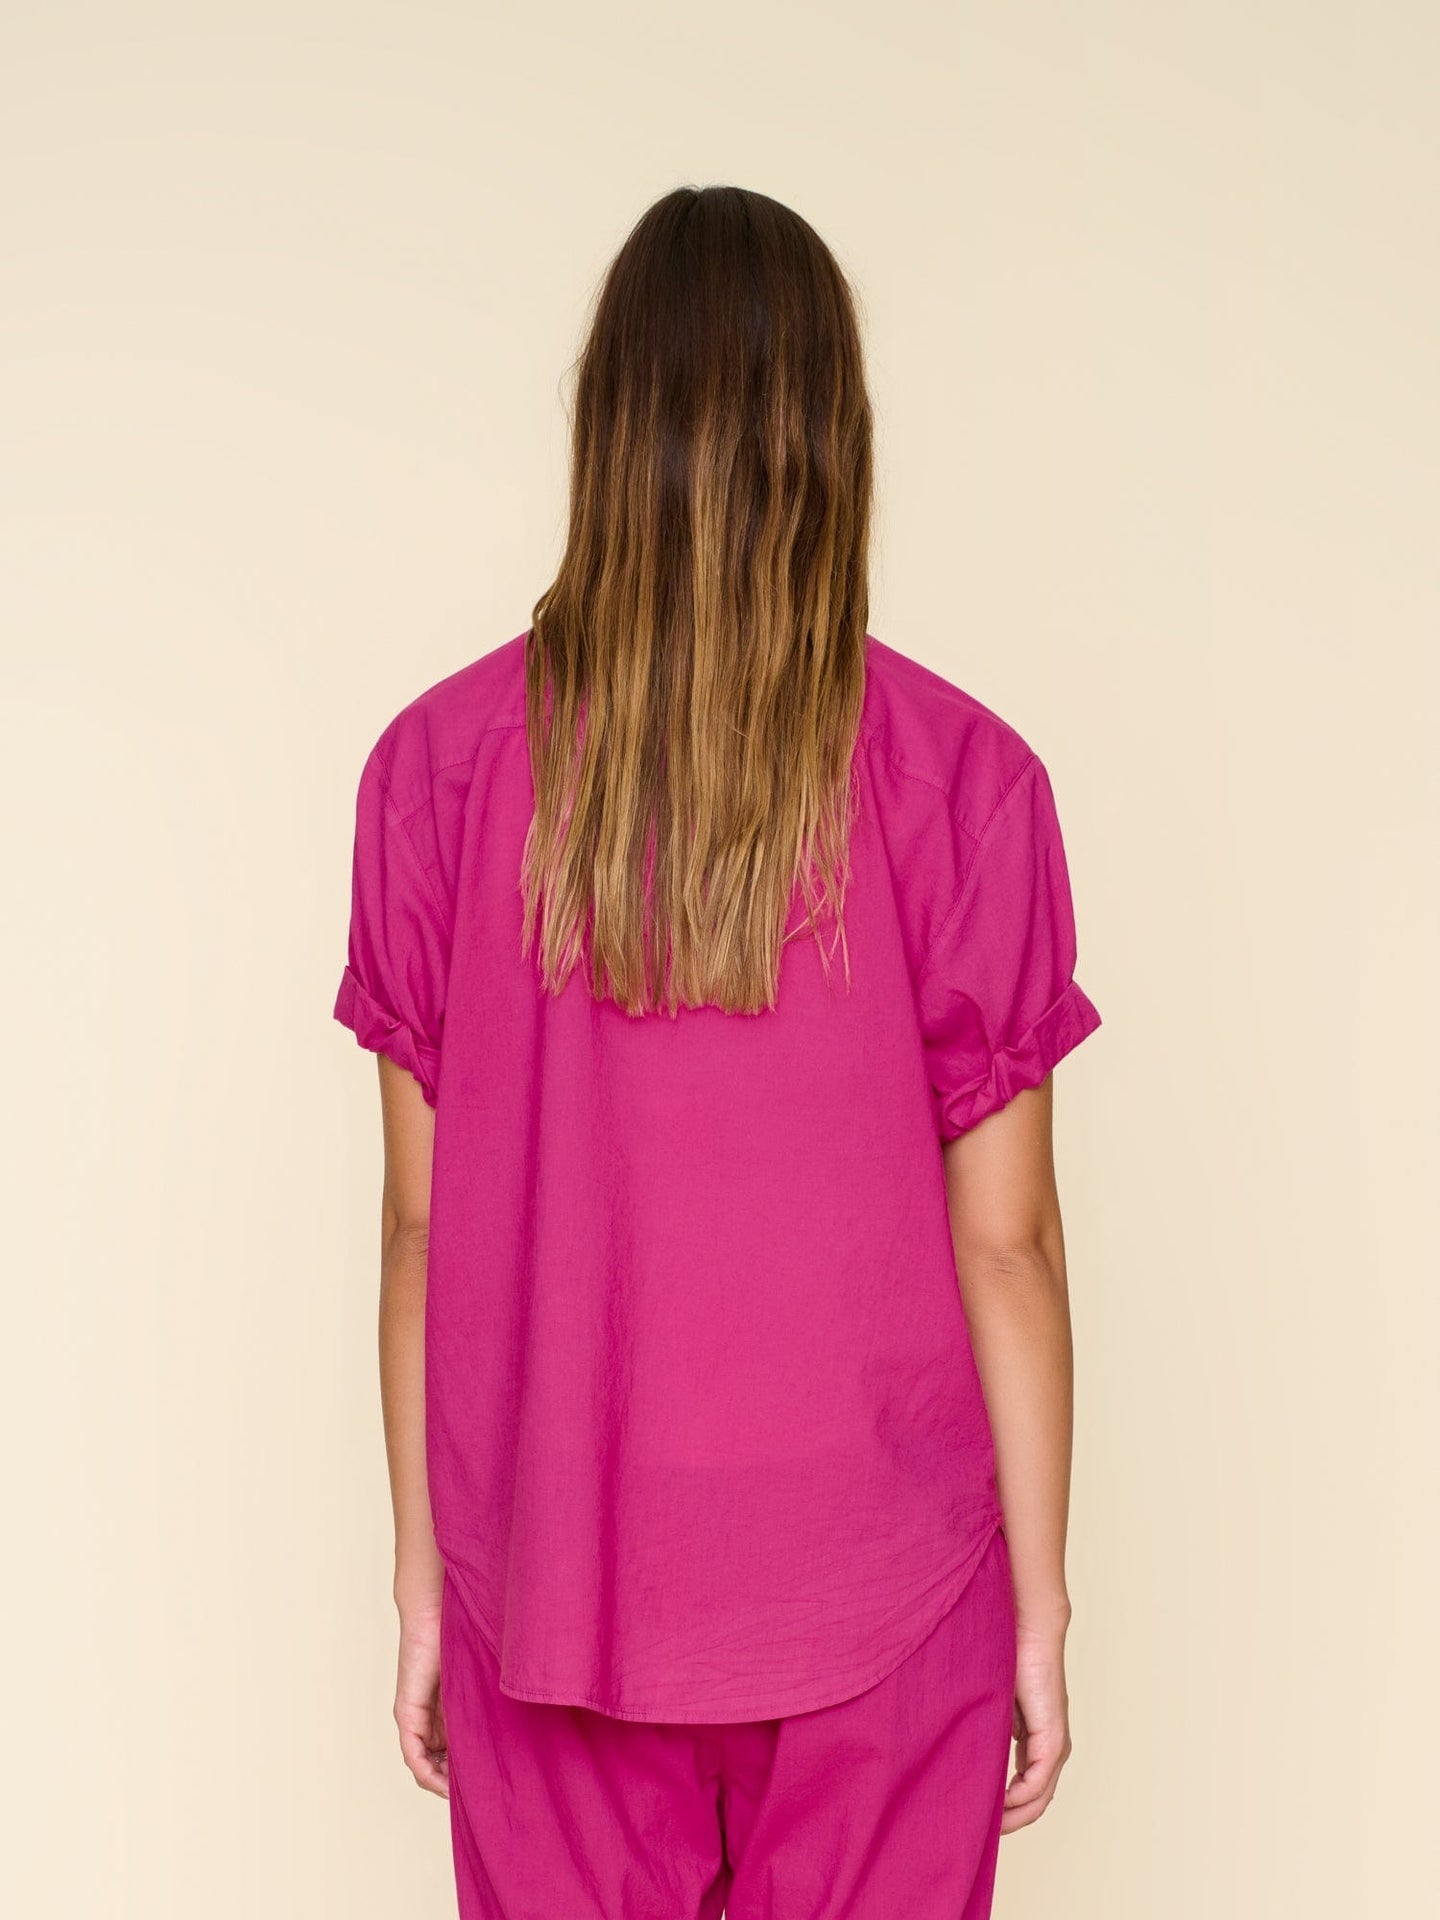 Shirt X5ctp114 Channing Shirt Pink-Plum